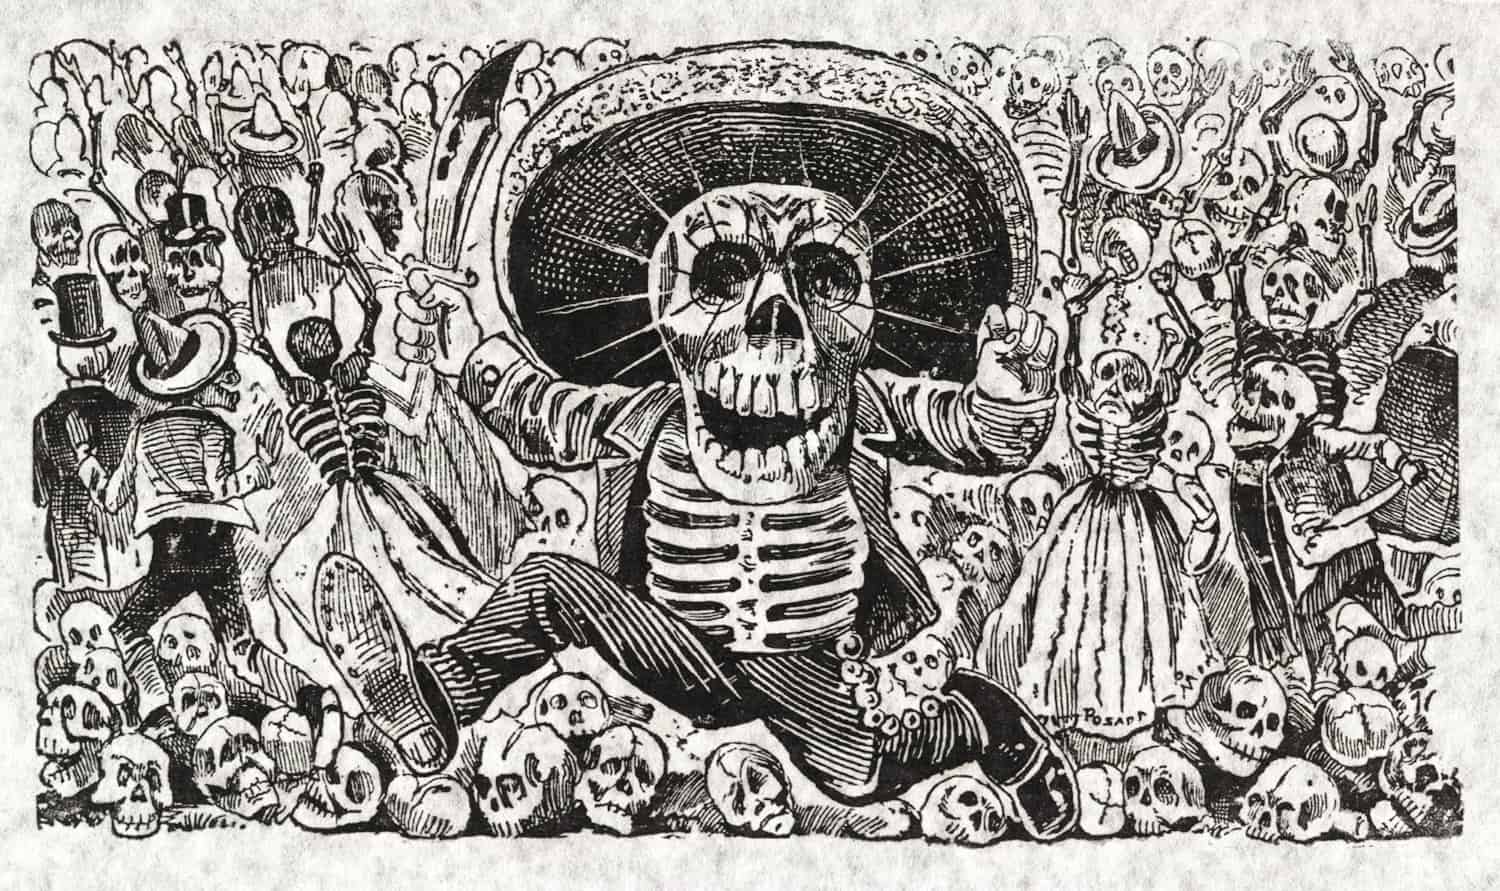 José Posada - Day of the Dead illustration